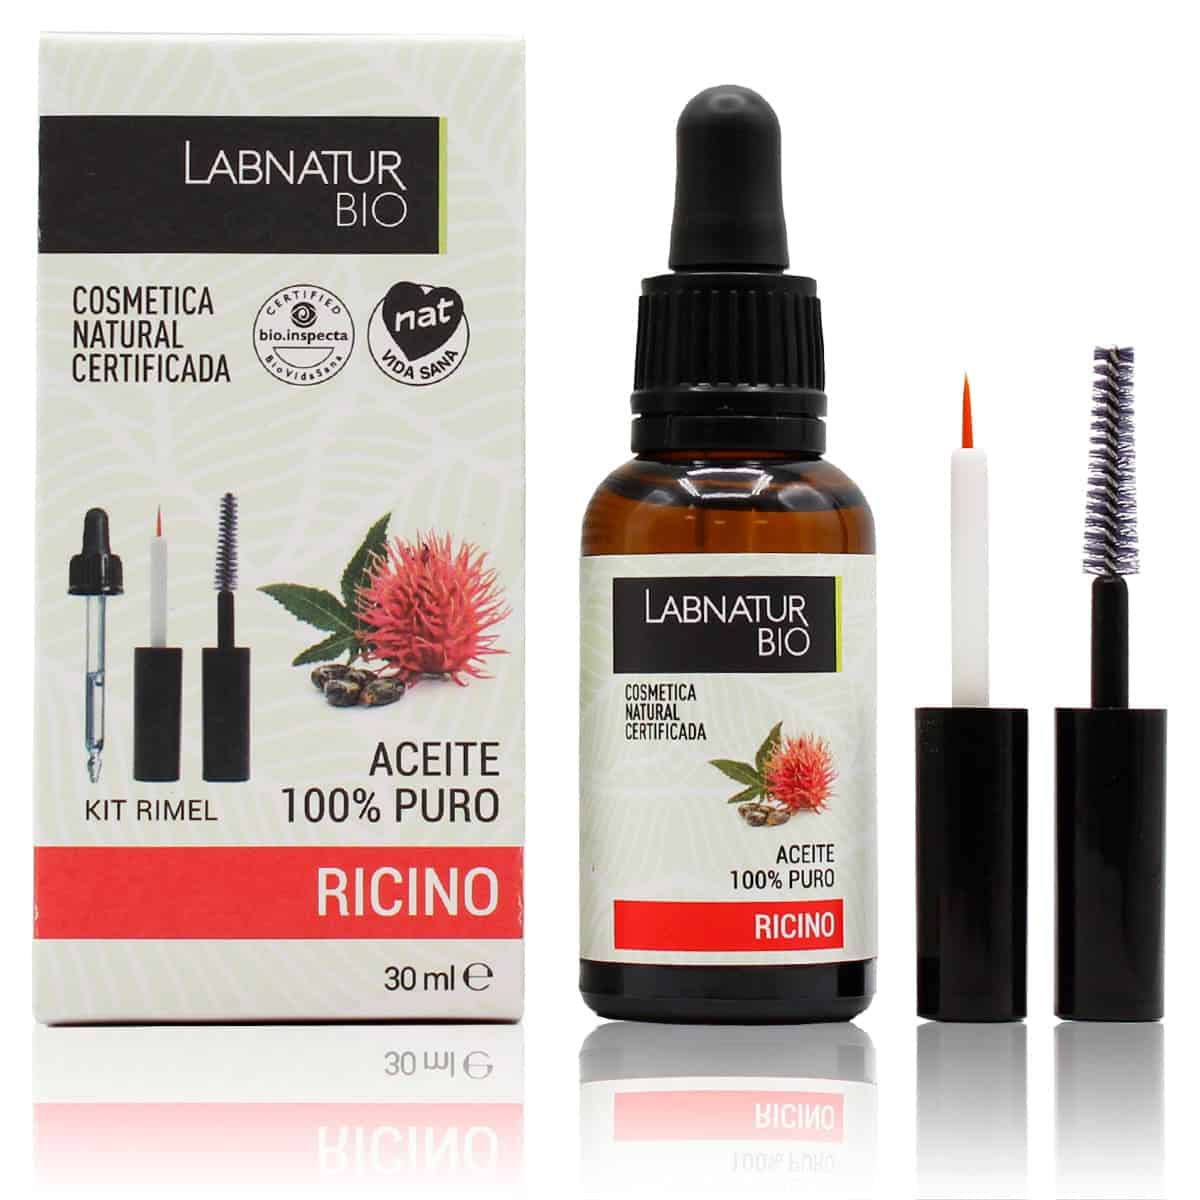 Comprar Aceite Ricino + Kit Rimel 30ml Labnatur Bio